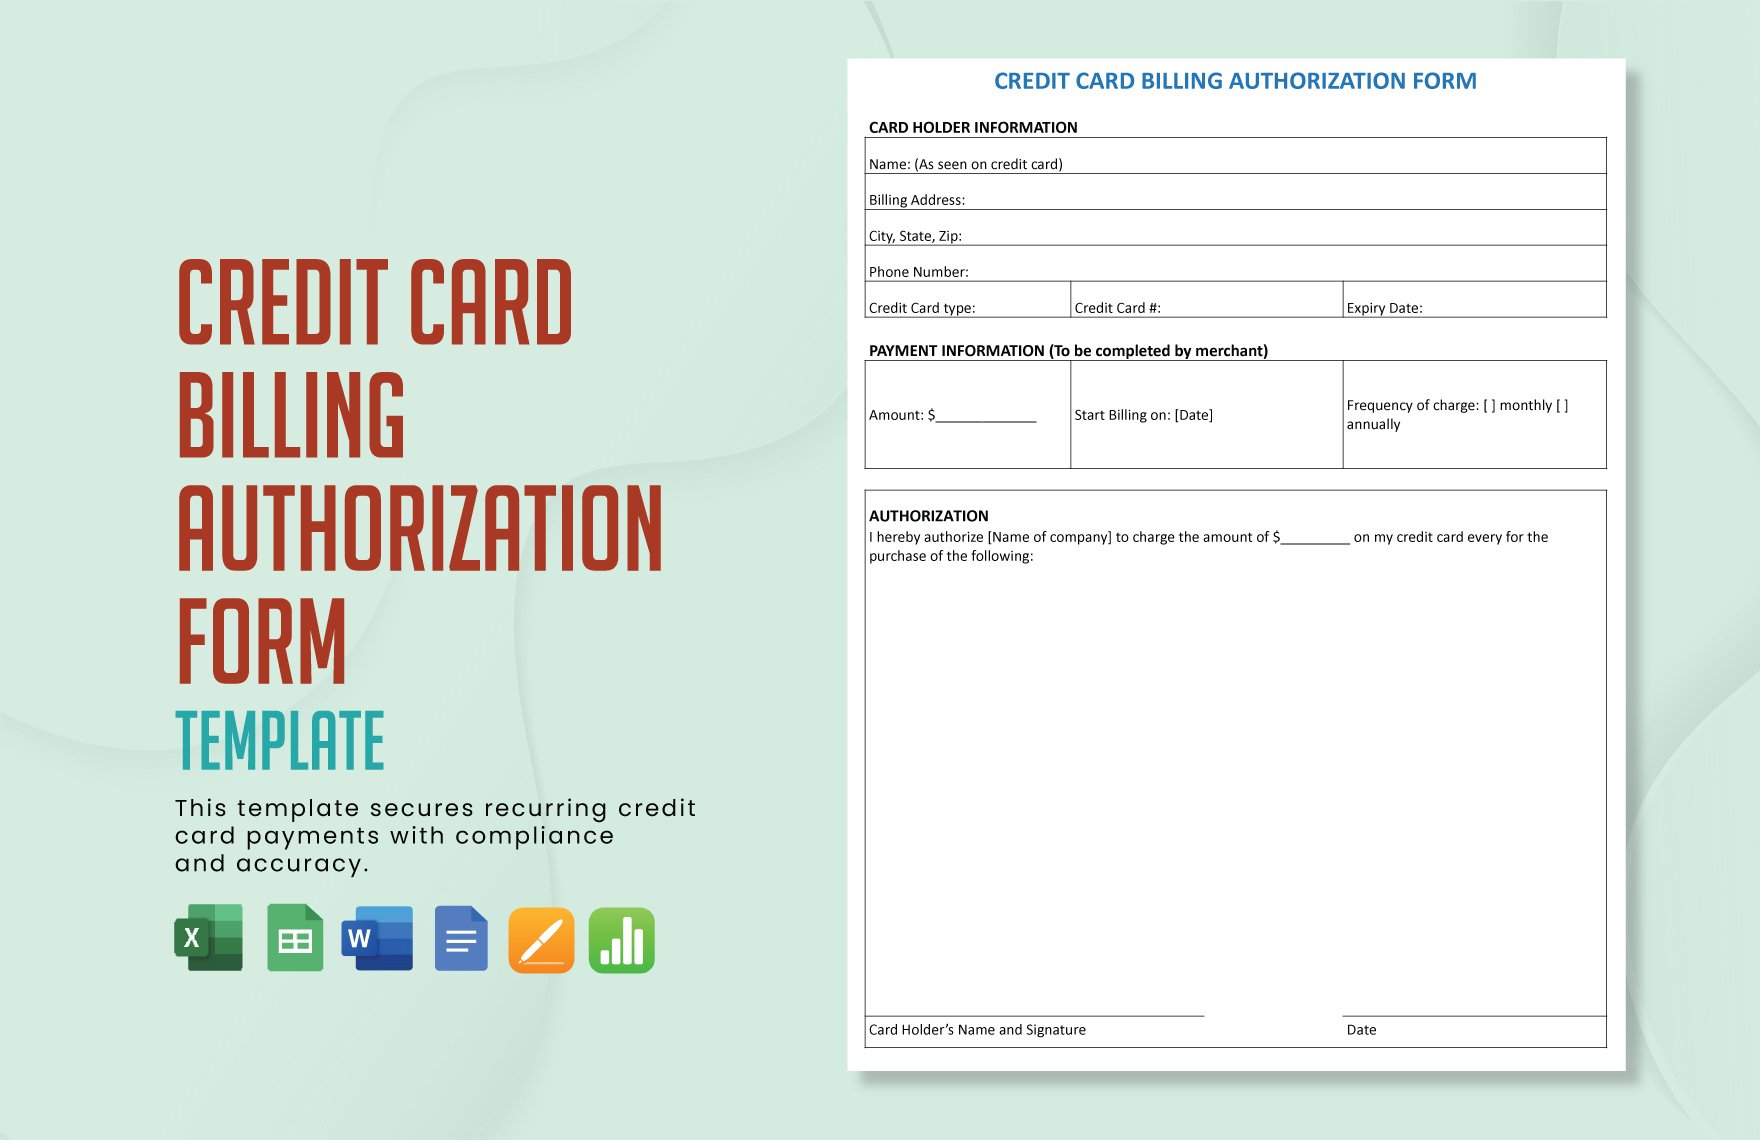 Credit Card Authorization Form Templates [PDF]